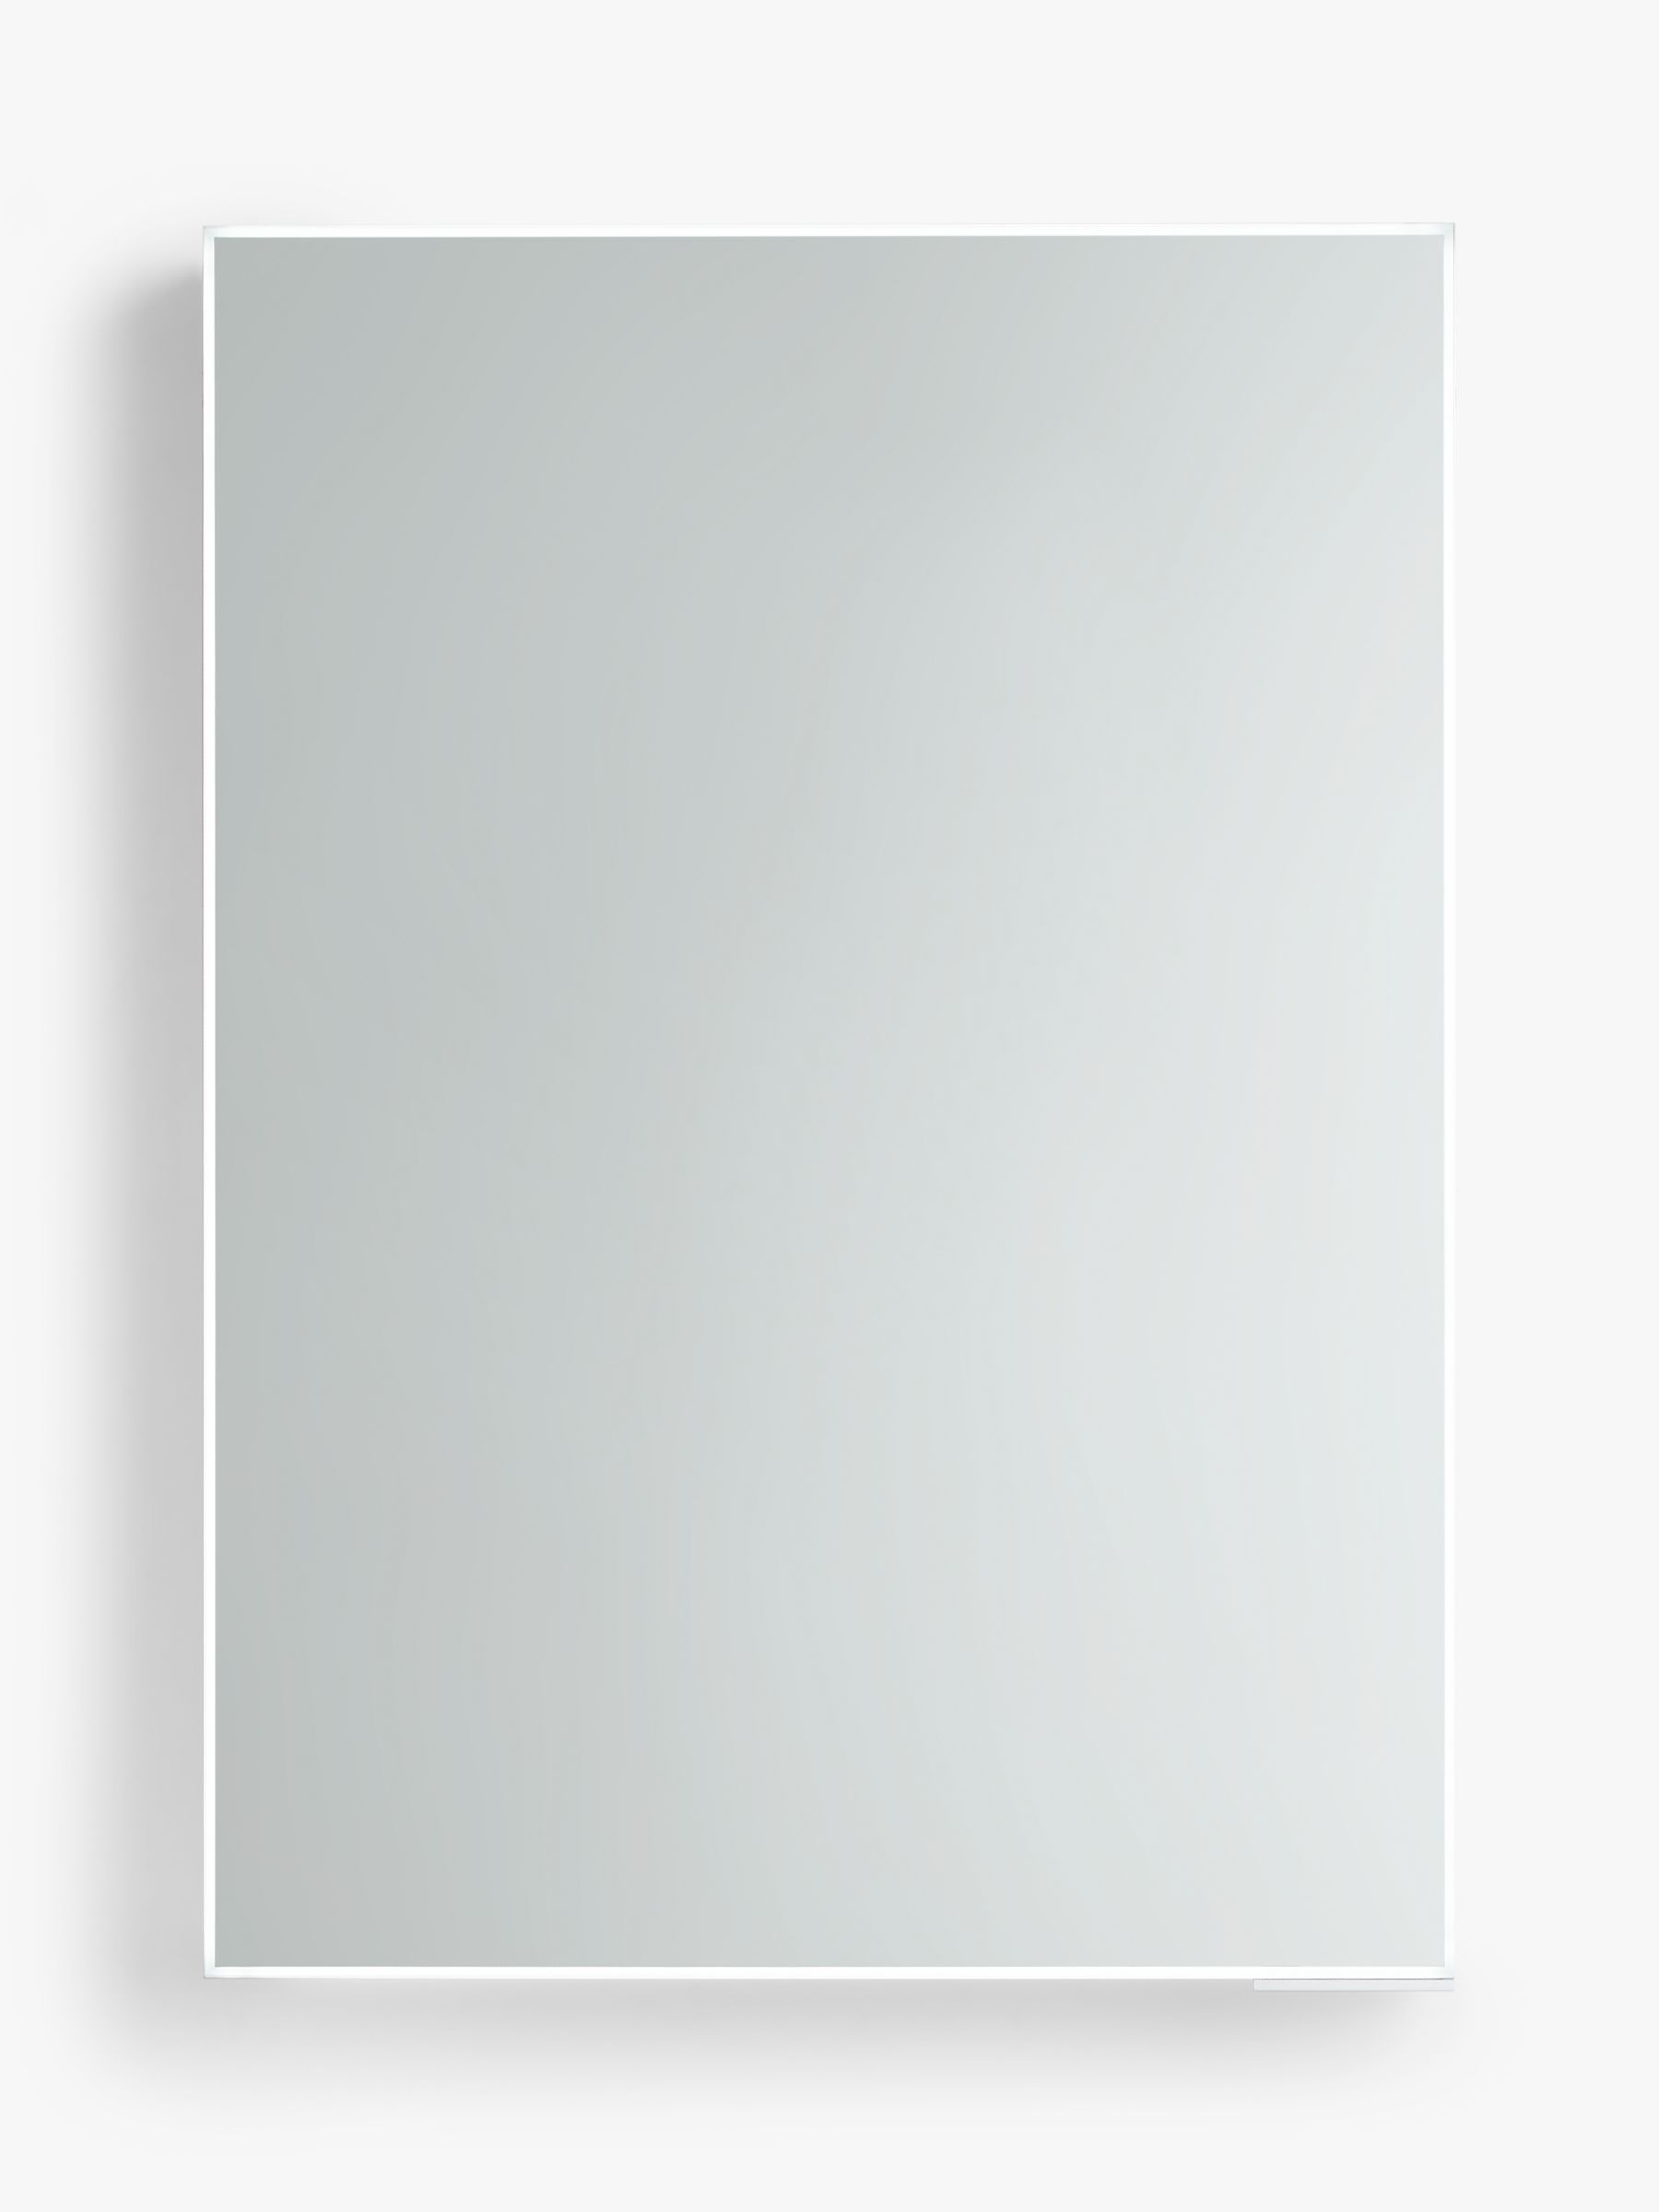 Photo of John lewis aspect single mirrored and illuminated bathroom cabinet